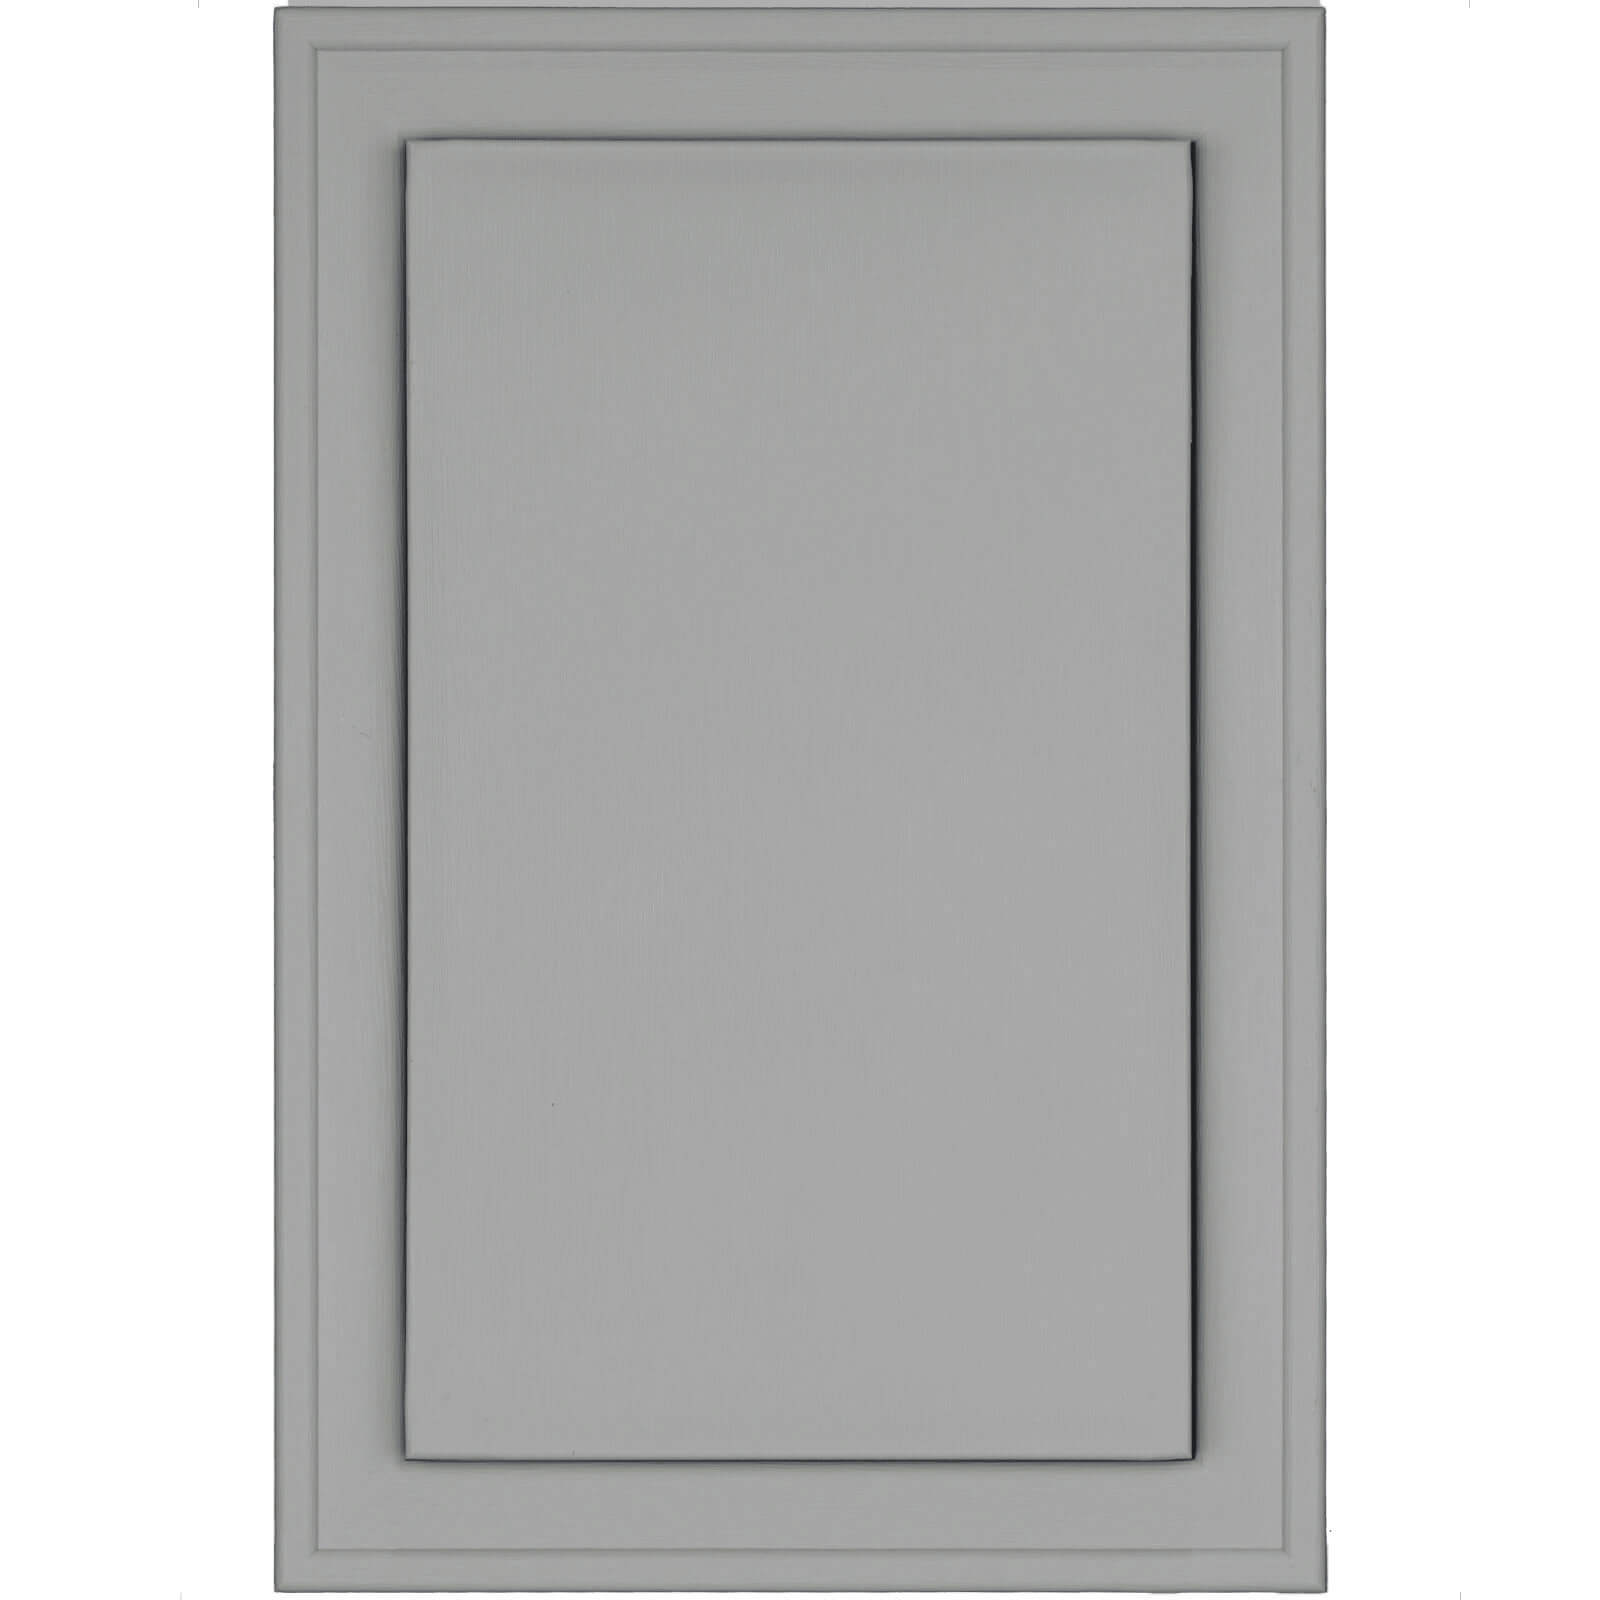 Standard Jumbo - 016 Light Grey - Single Item